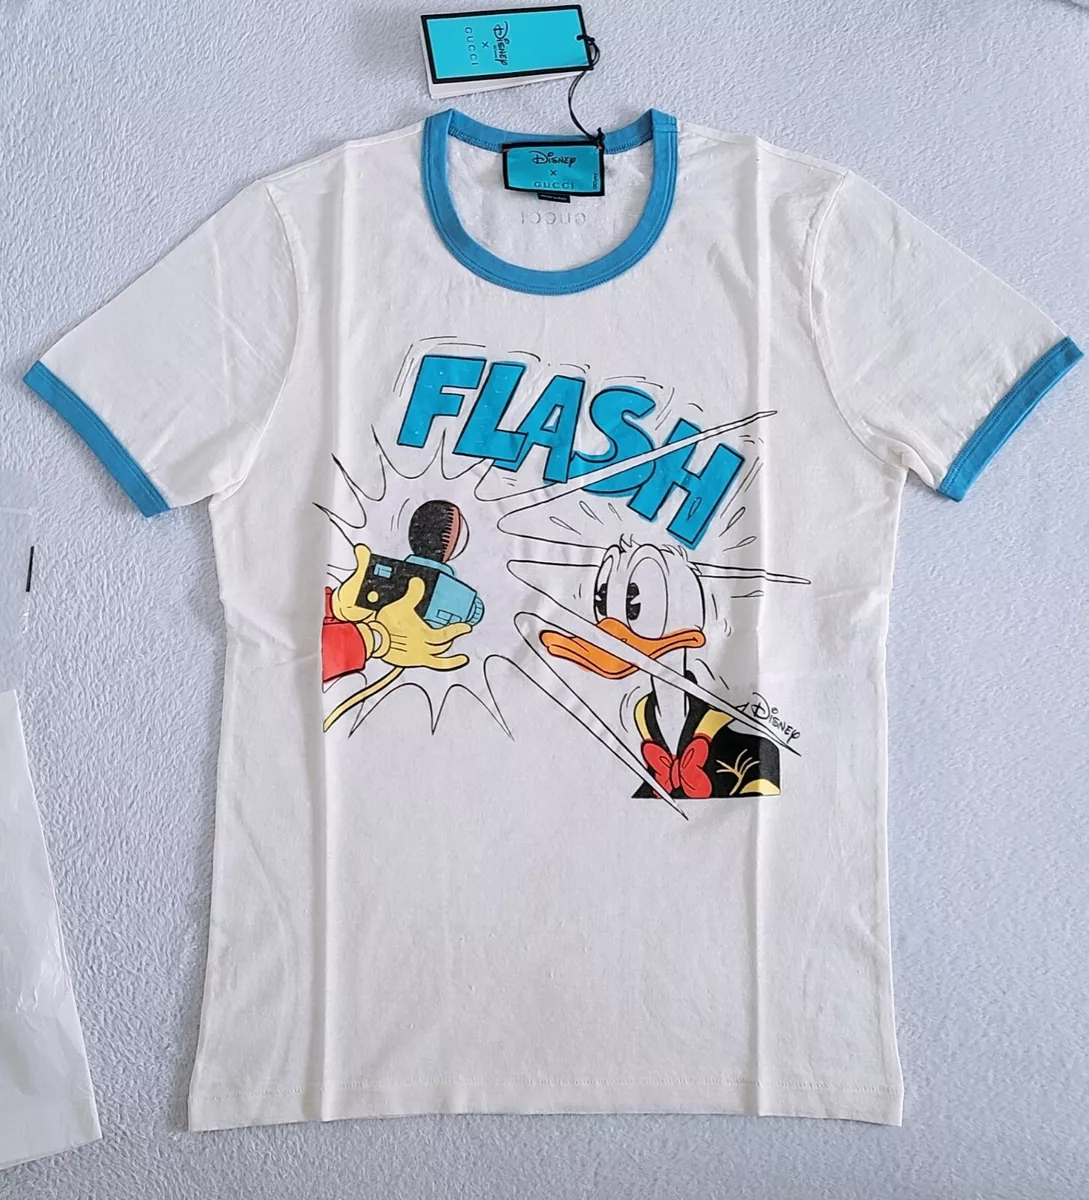 New Authentic GUCCI×DISNEY Edition Flash Donald duck print T-shirt white Sz  XS